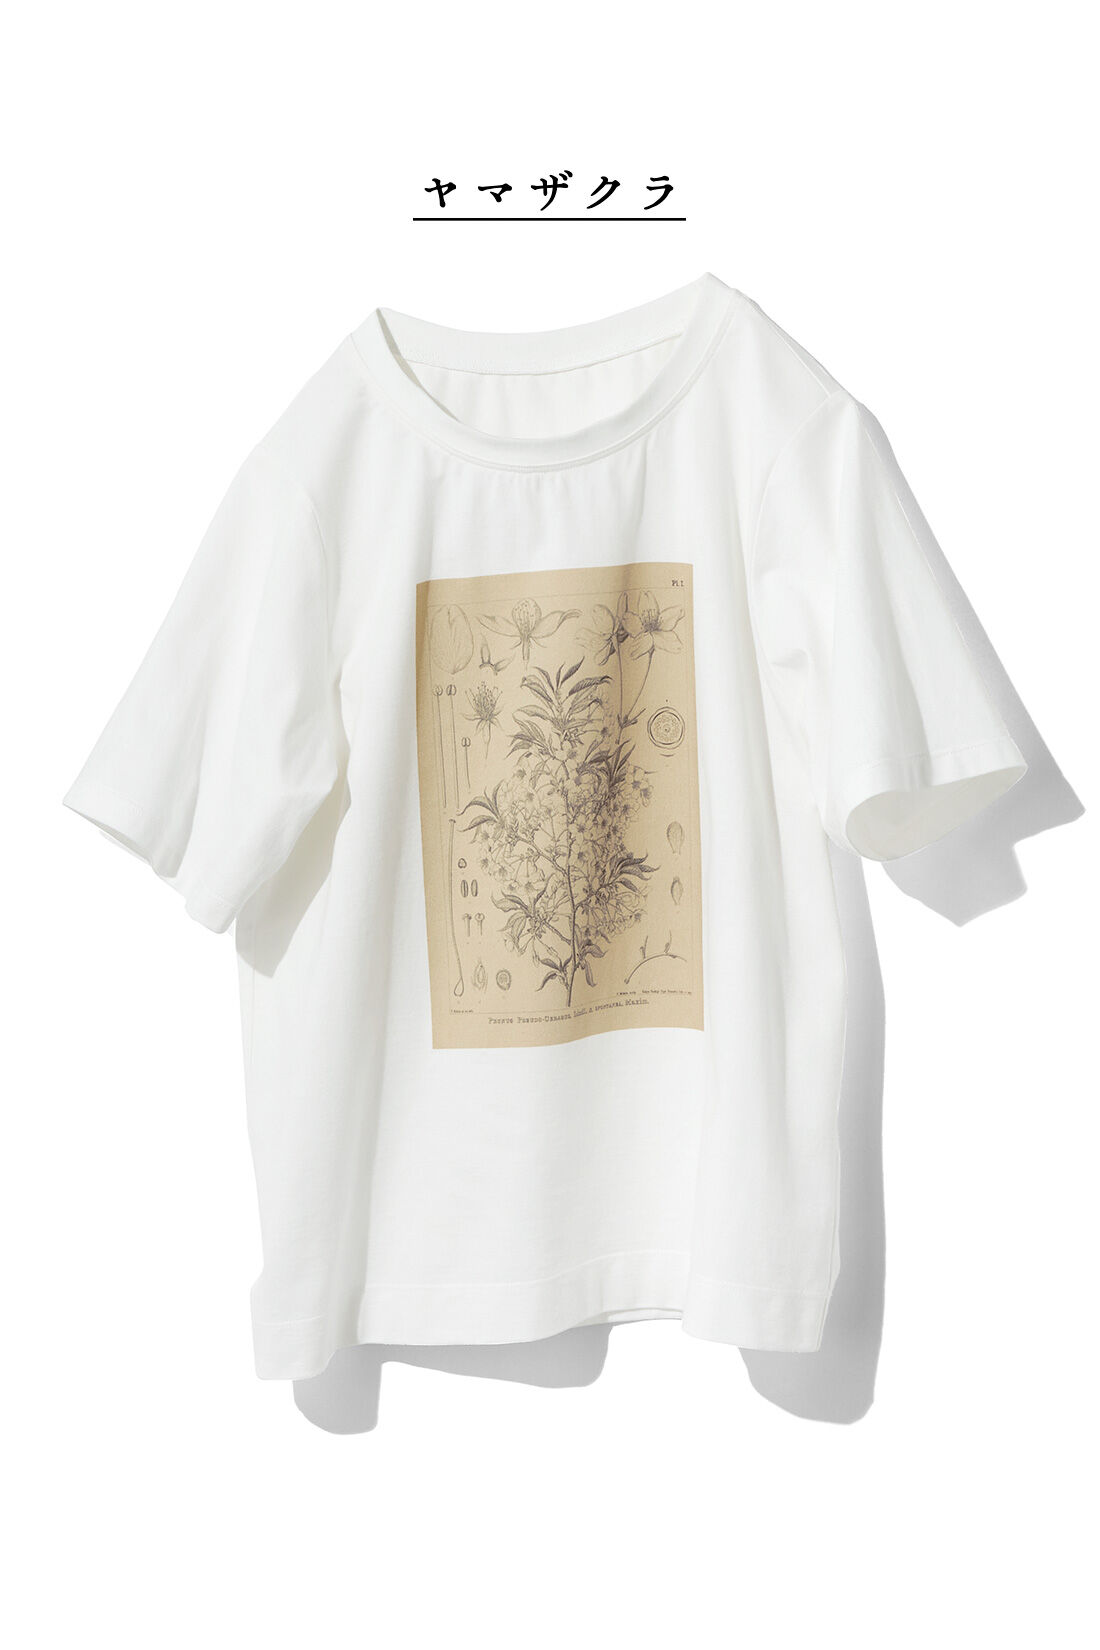 IEDIT|牧野植物園×IEDIT[イディット]コラボ　植物図Tシャツ〈ヤマザクラ〉